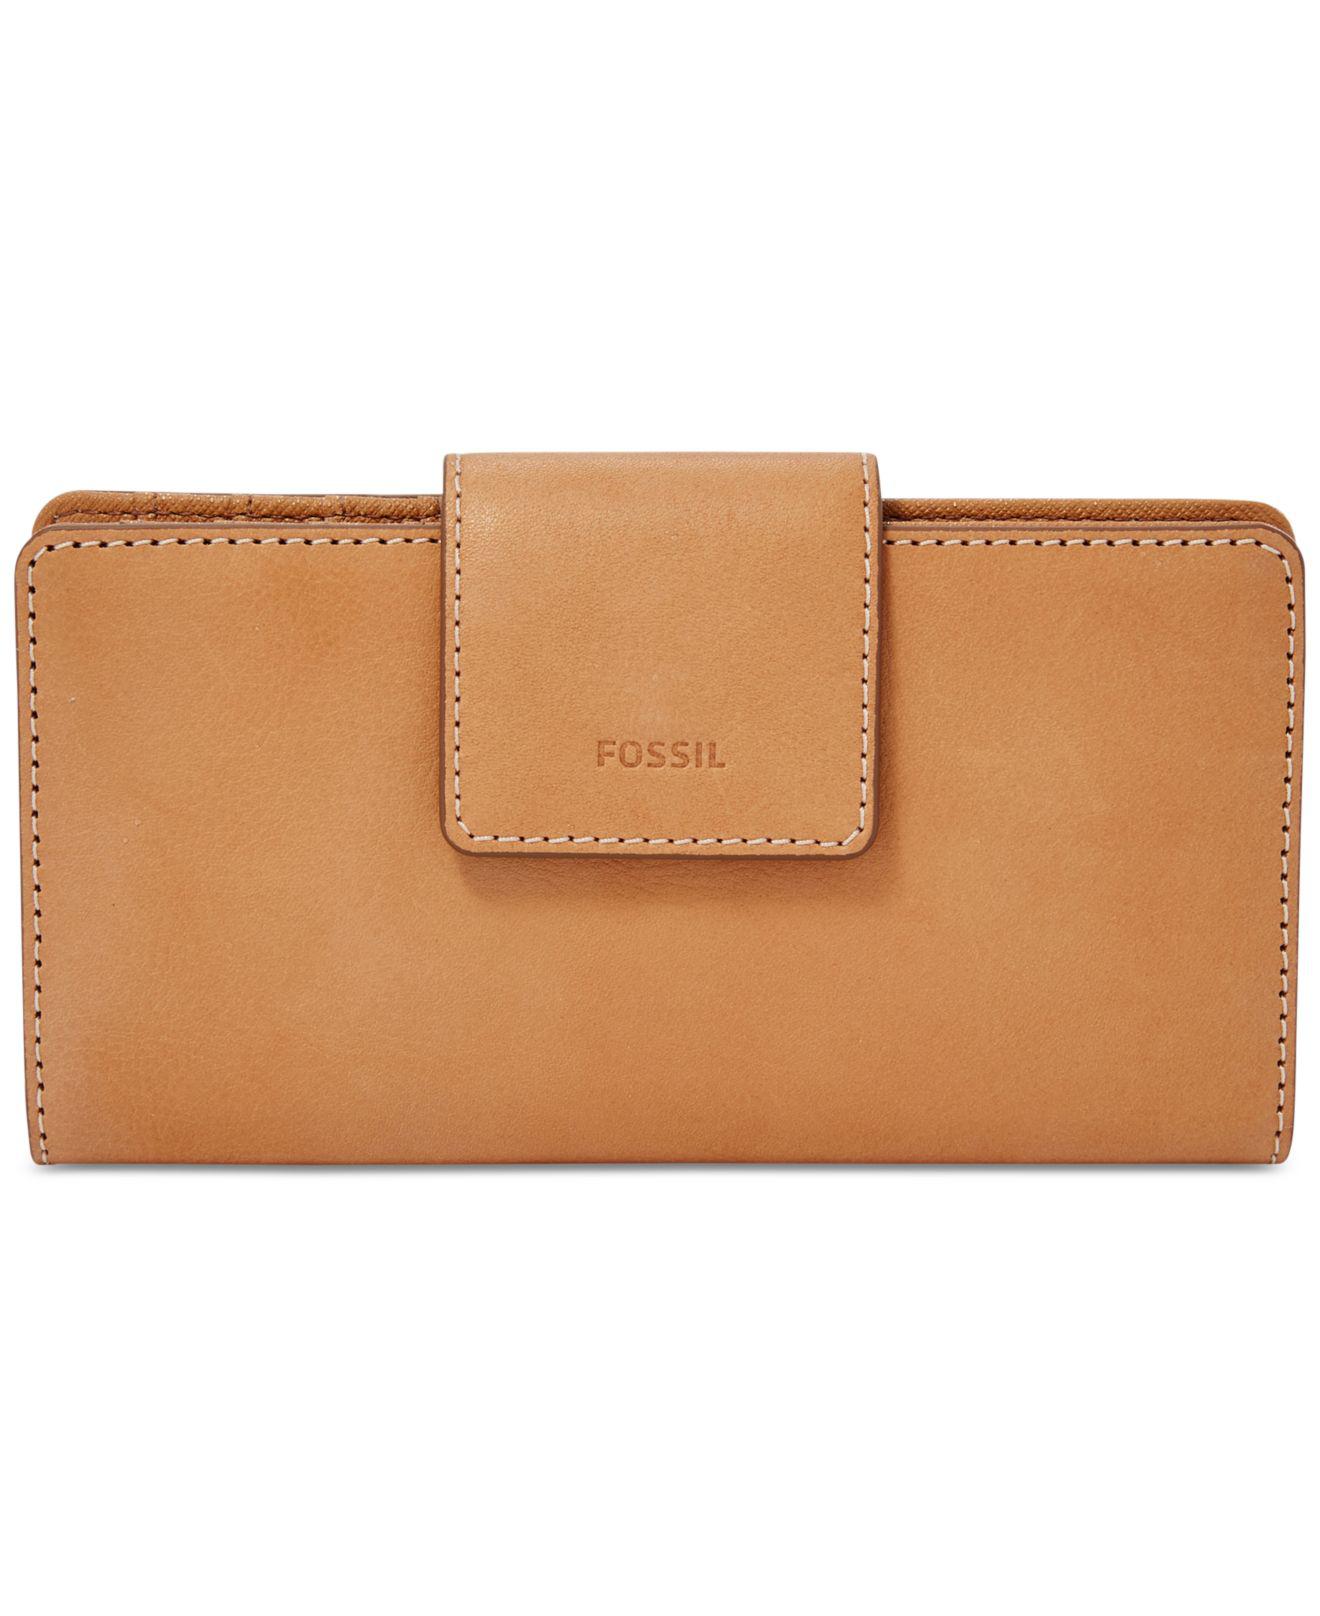 Fossil Leather Emma Tab Clutch Wallet in Tan (Brown) - Lyst